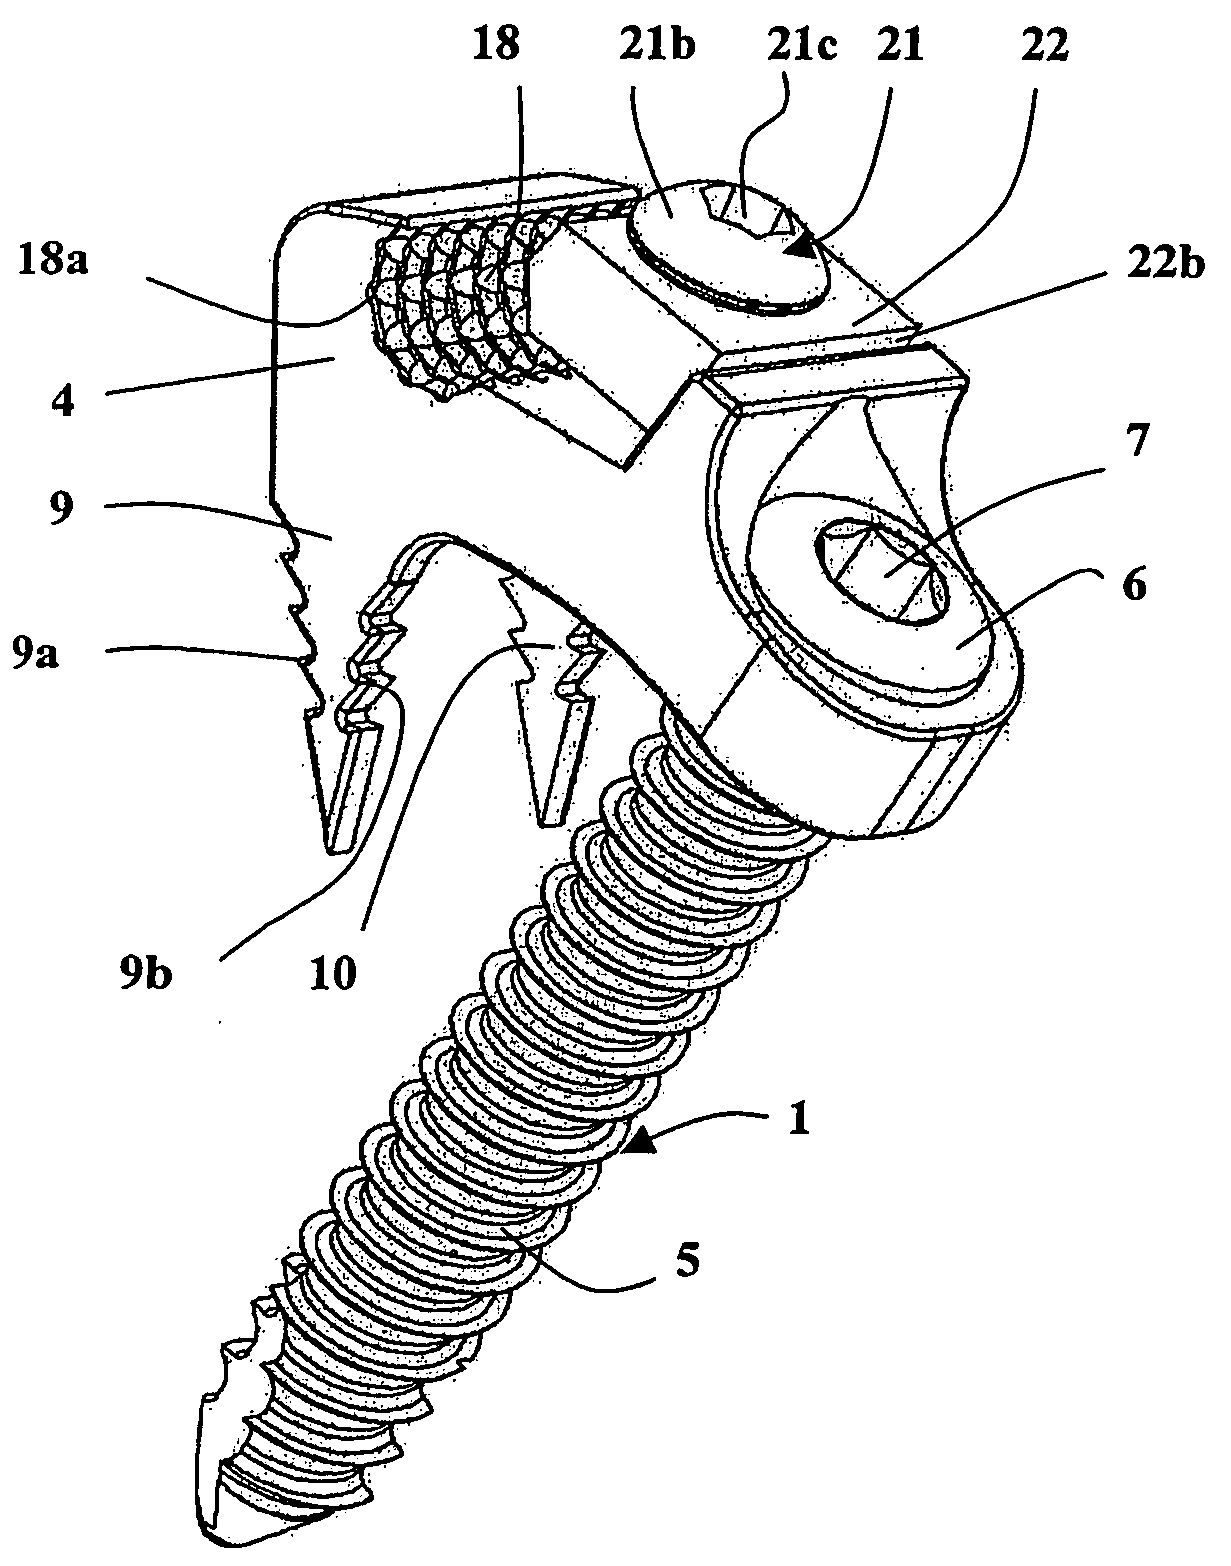 Device comprising anterior plate for vertebral column support